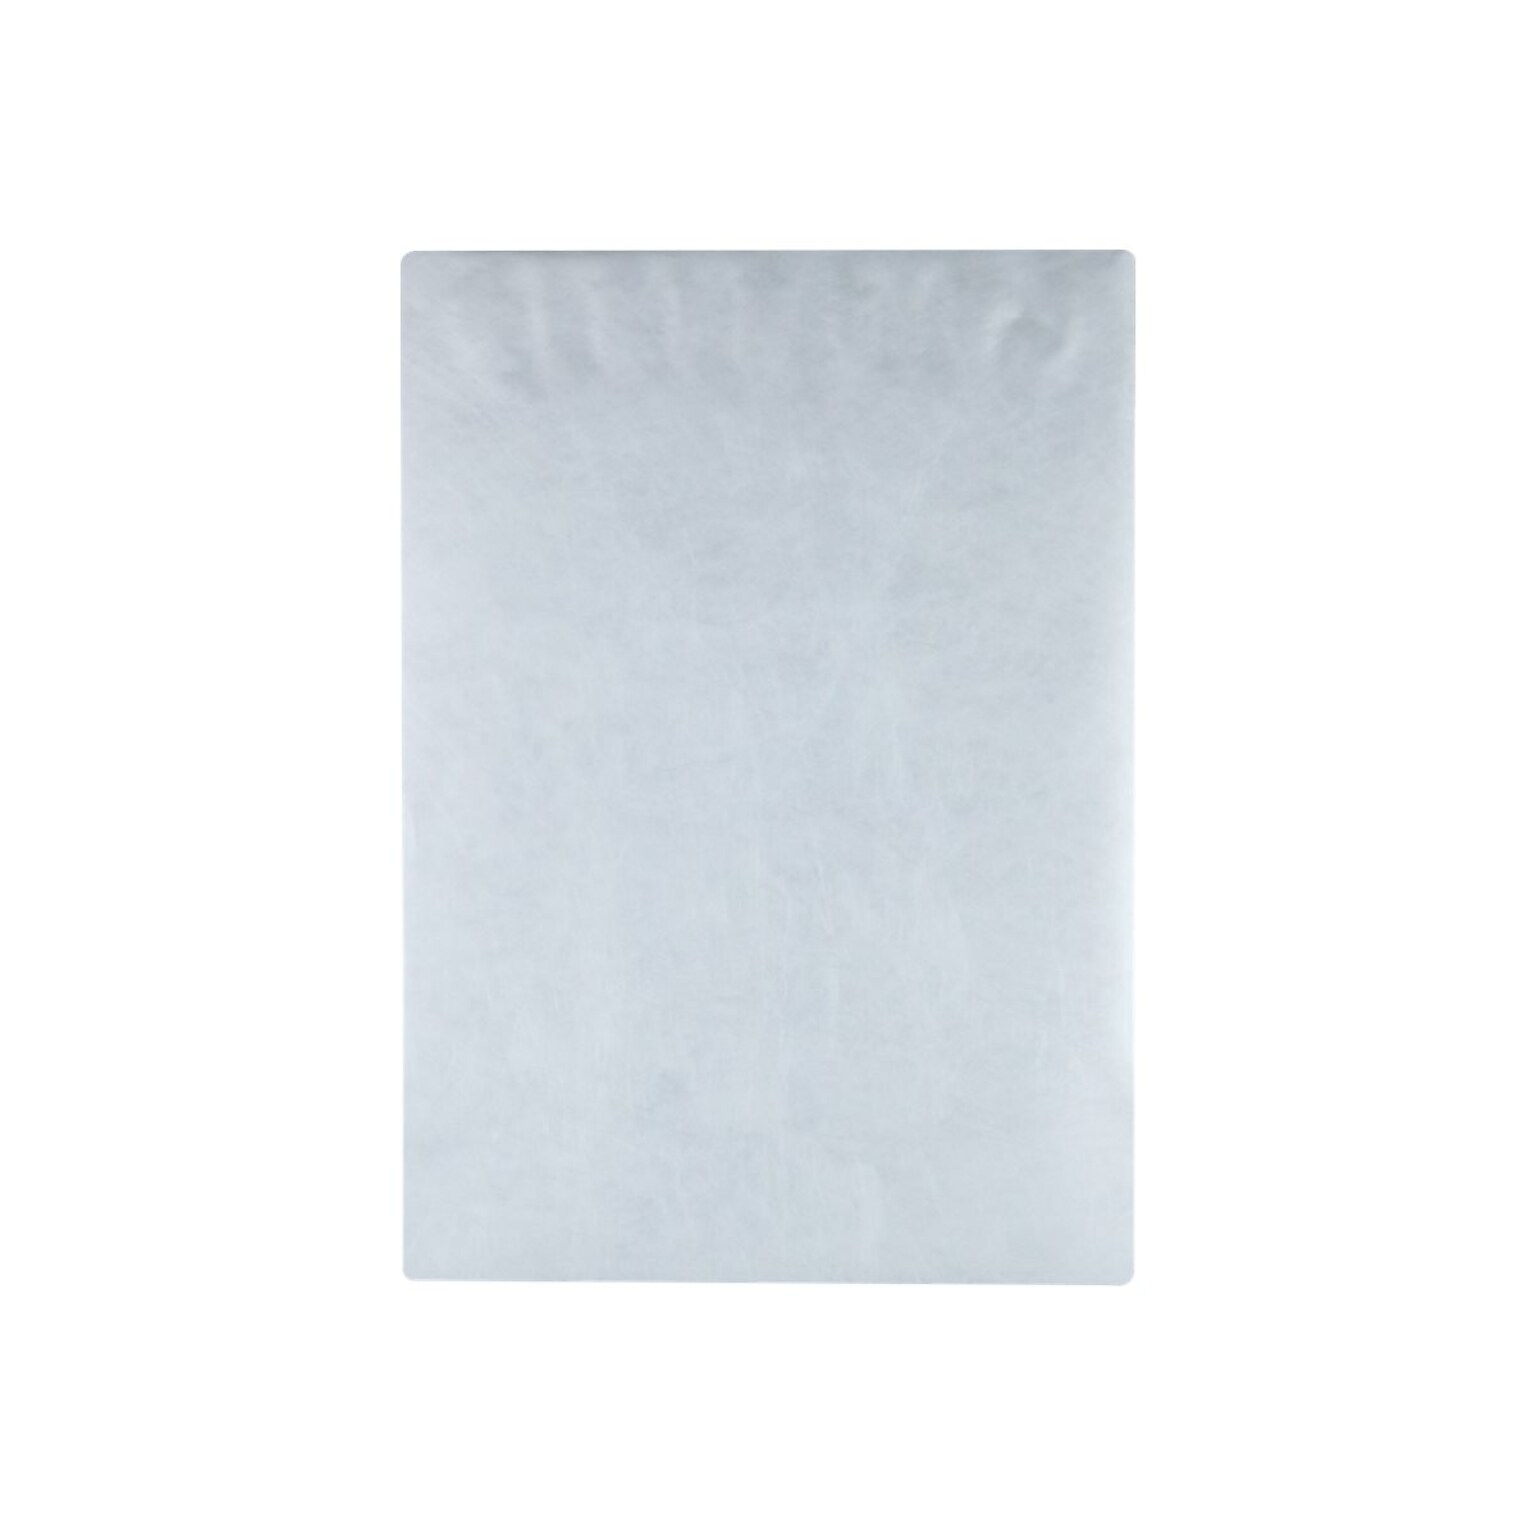 Quality Park Survivor Tyvek Self Seal Catalog Envelopes, 13 x 19, White, 25/Box (QUAR5101)